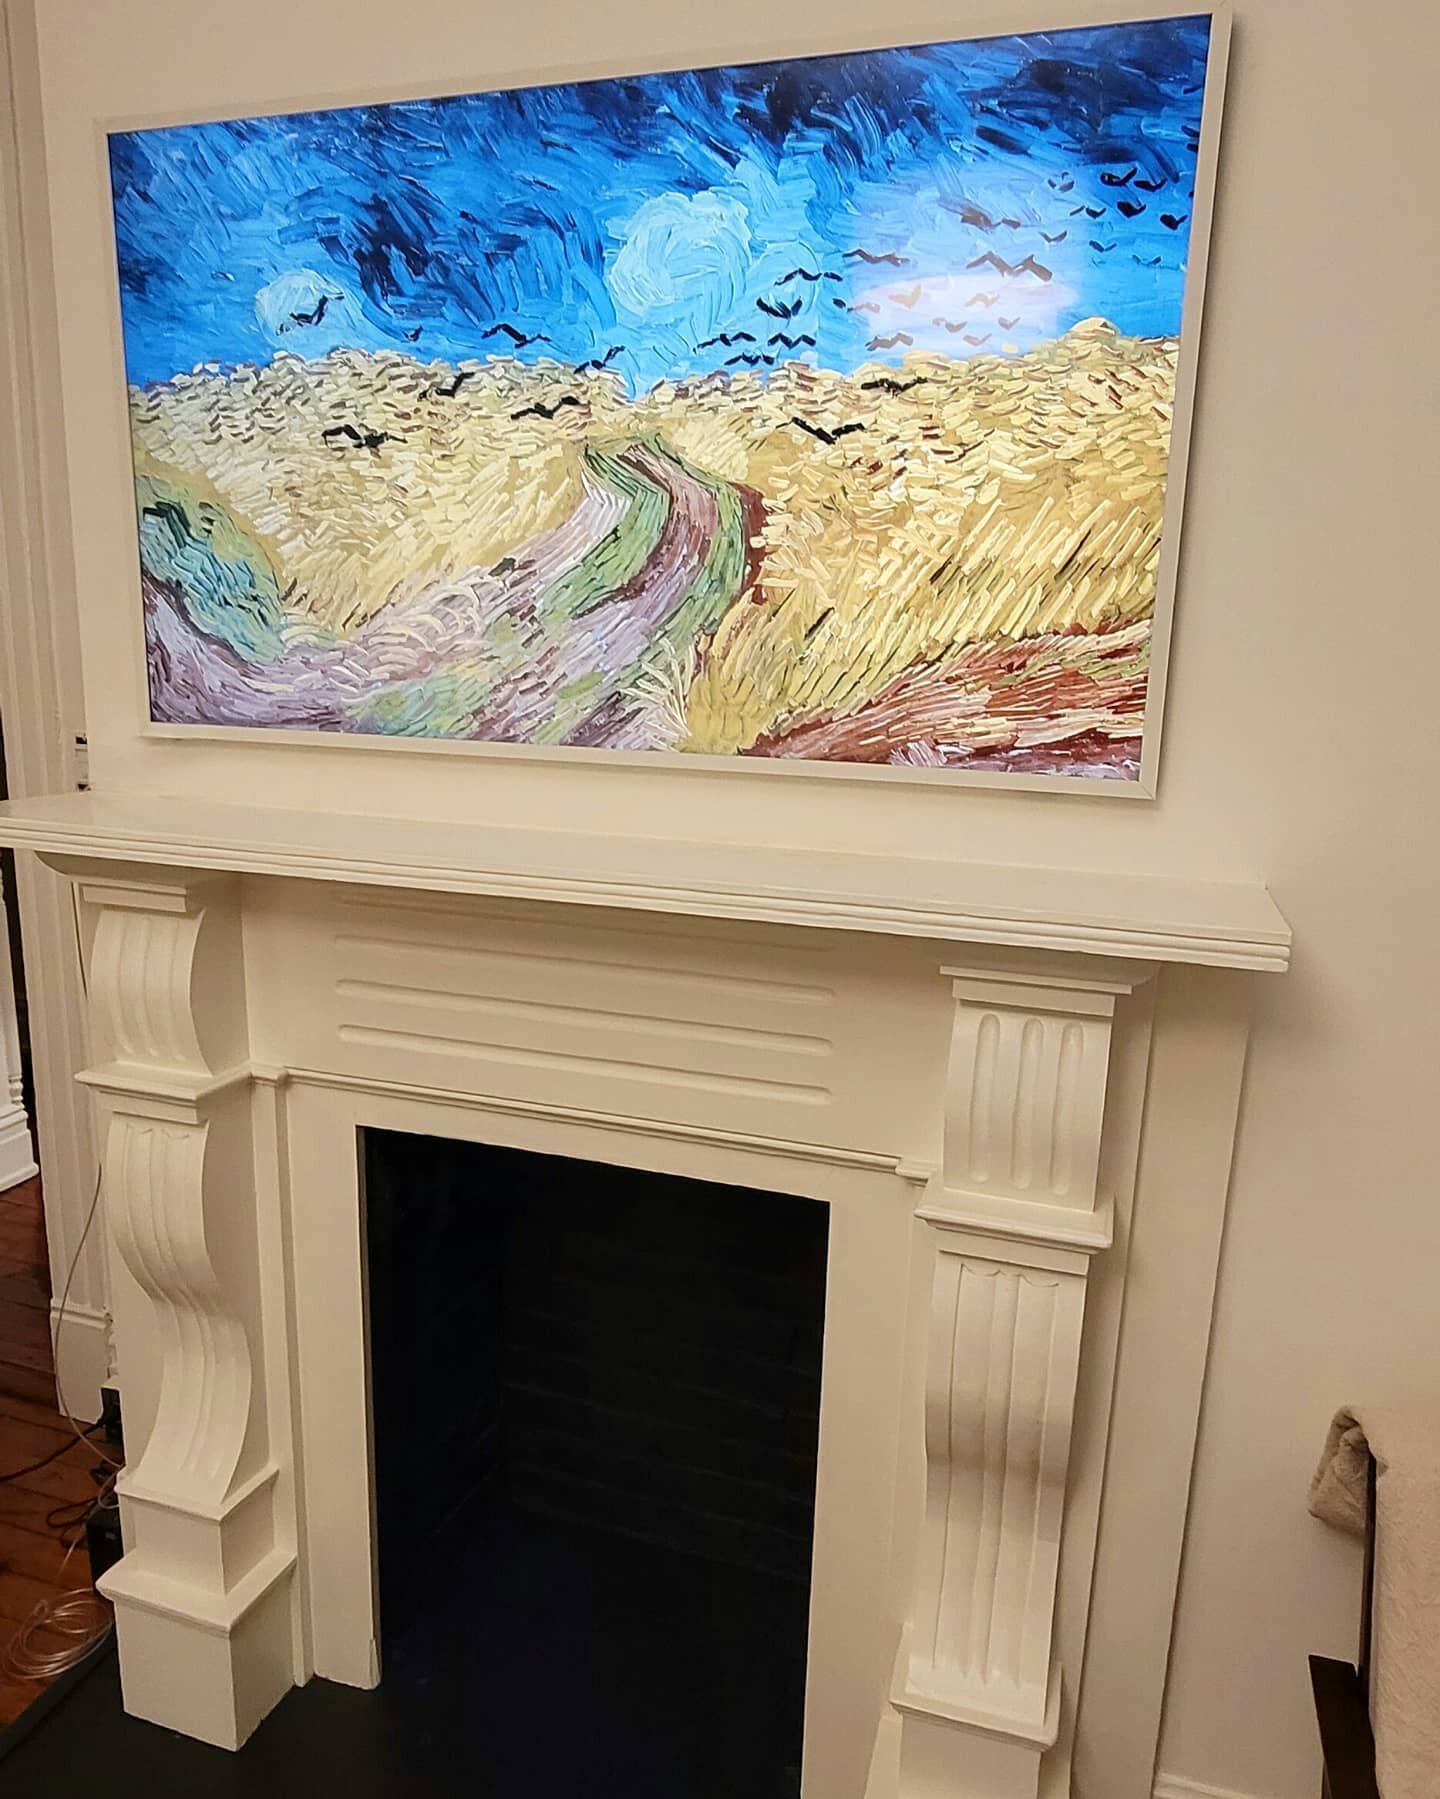 55&quot; @samsungus Frame TV wall mounted with white frame. (TV shown in Art Mode 🖼 ) 

#quality #clarity #craftsmanship #jaaudiorva #audiovisual #audio #video #media #construction #fireplace #interiordesign #homedecor #businesssolutions #rva #virgi